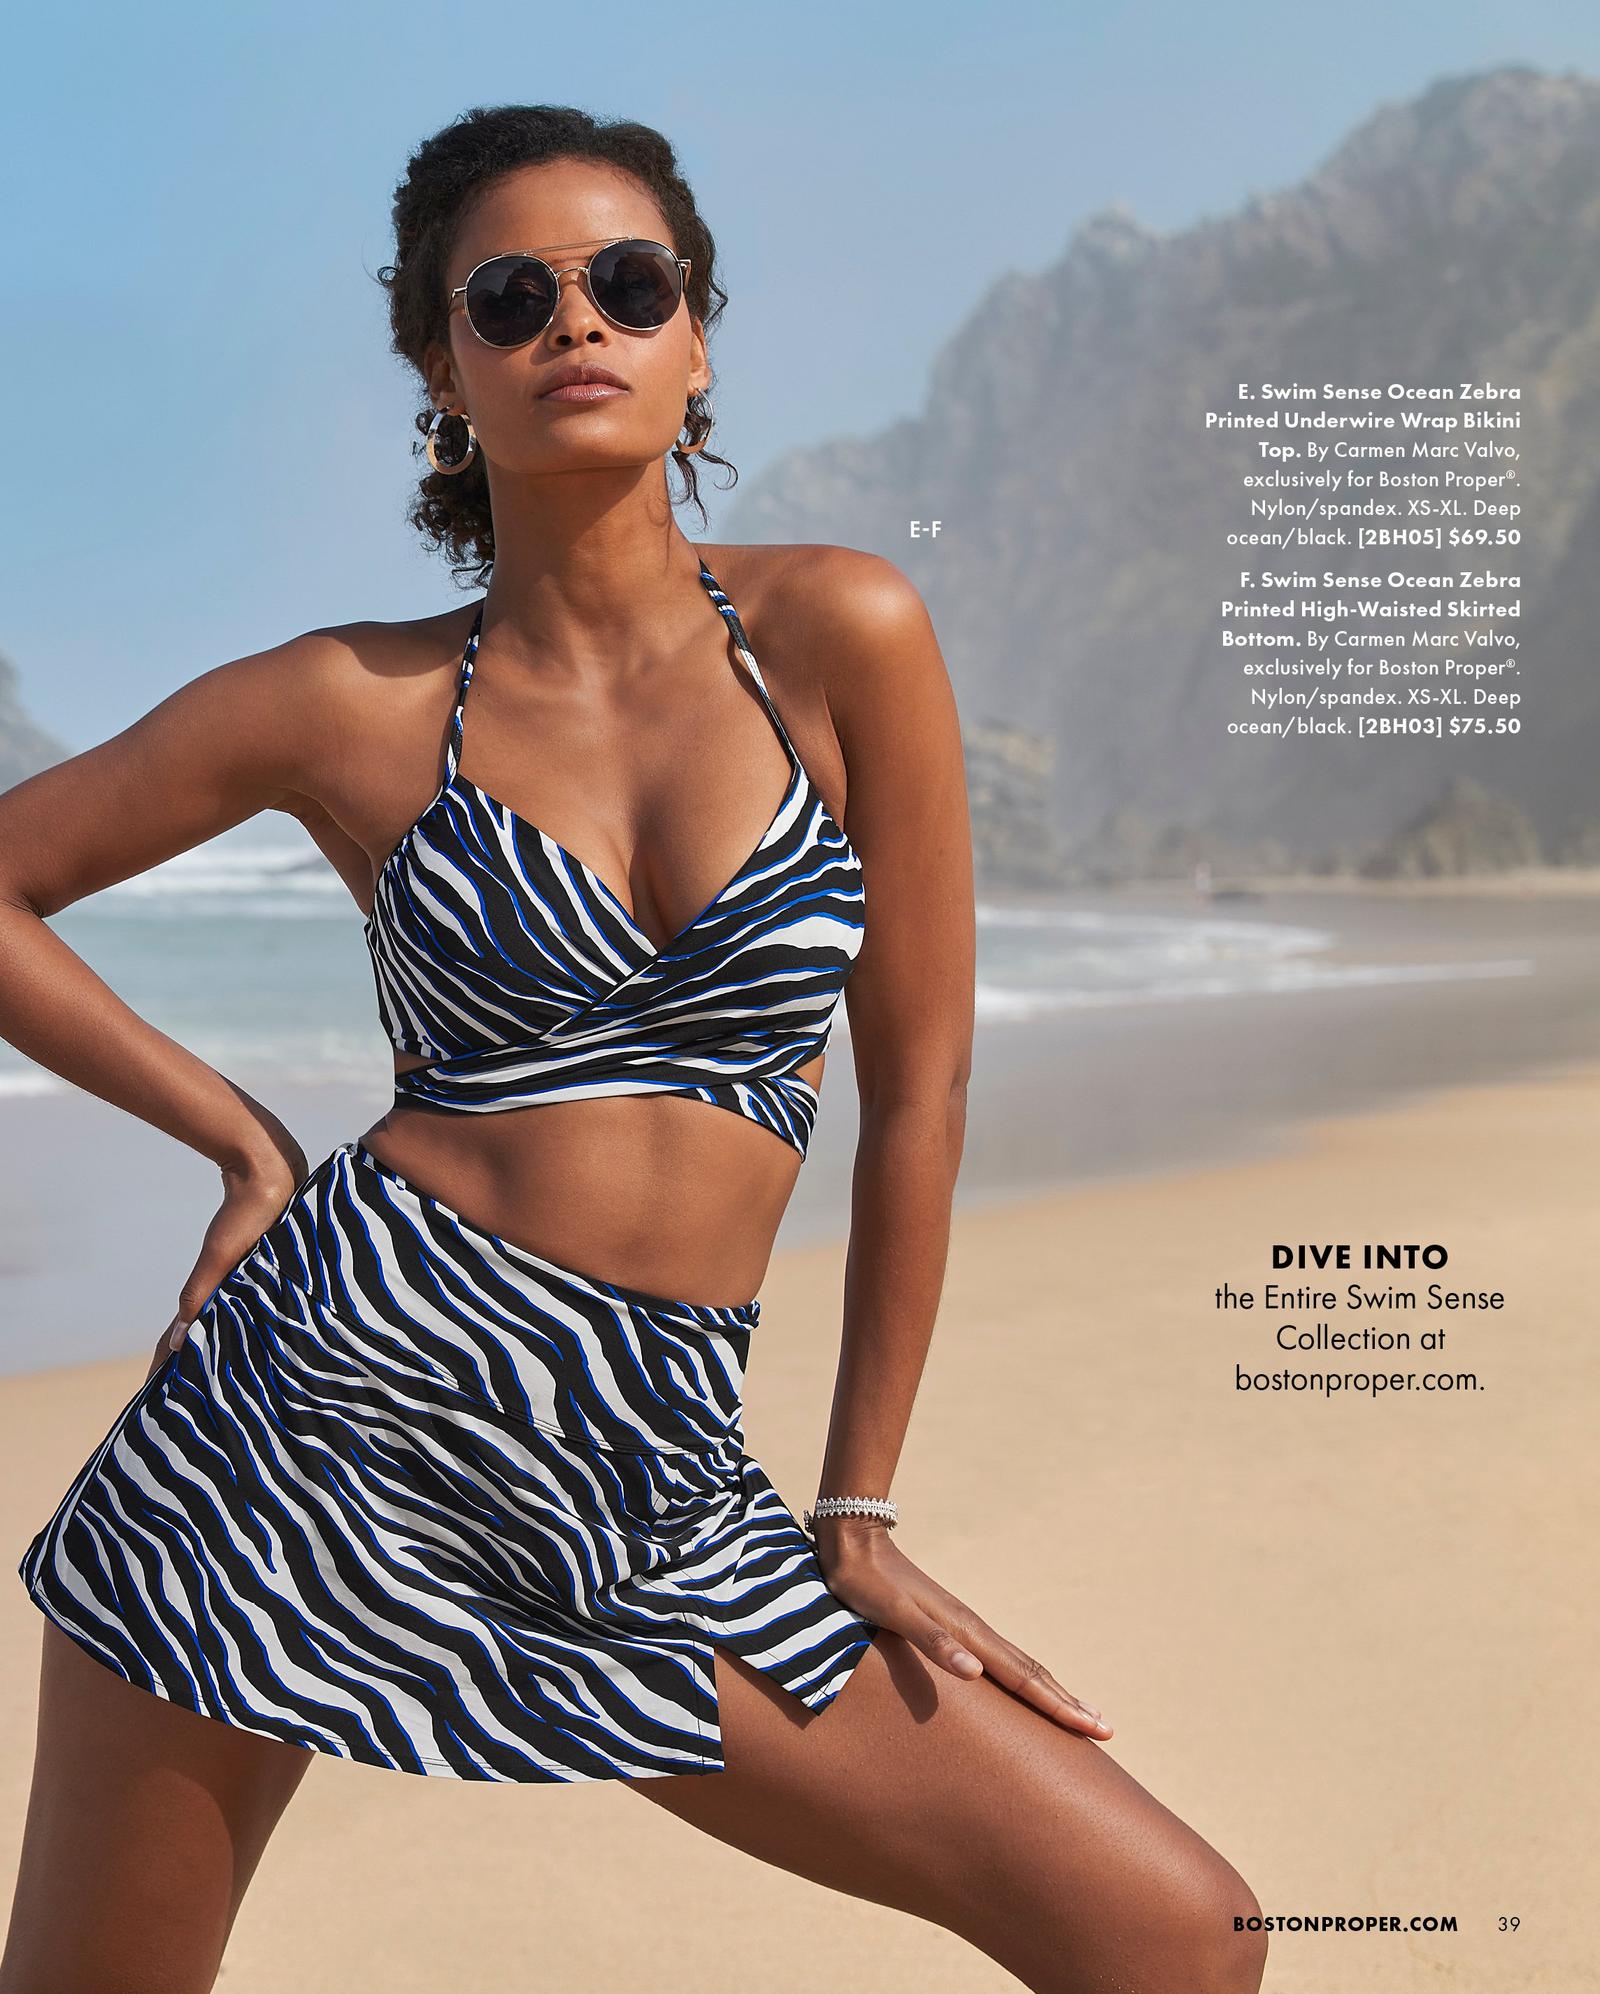 model wearing a blue and black zebra print bikini top and skirted bottom with sunglasses.